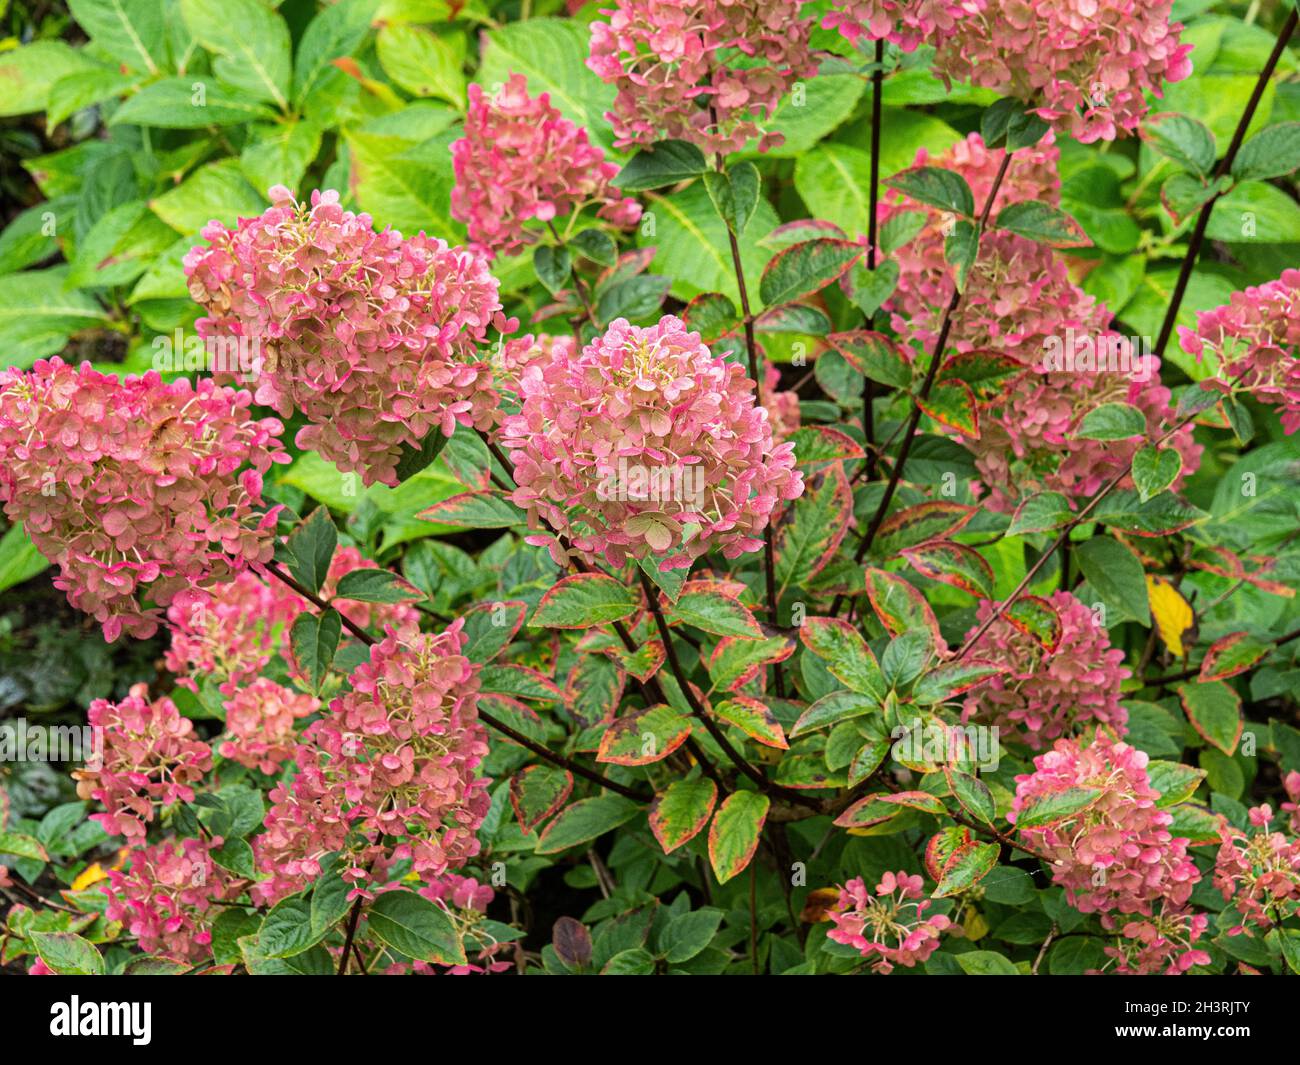 The pink tinged flowers of Hydrangea paniculata Sundae Fraise Stock Photo